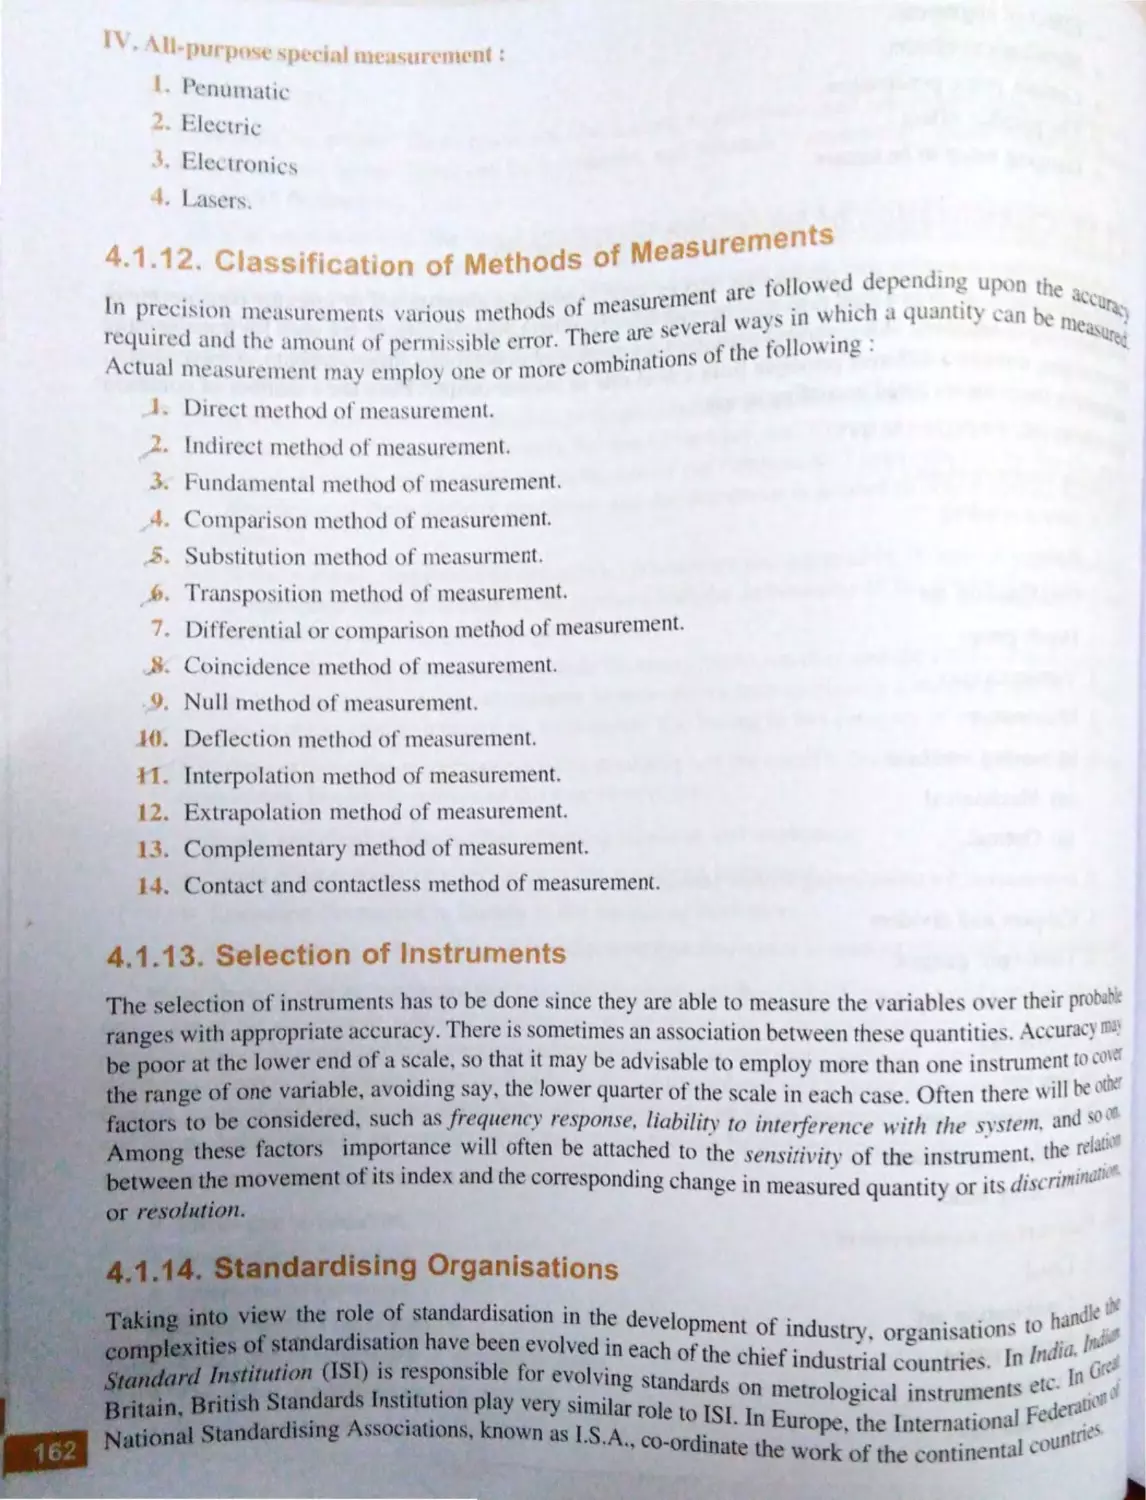 4.1.12. Classification of Methods of Measurements
4.1.13. Selection of Instruments
4.1.14. Standardising Organisations